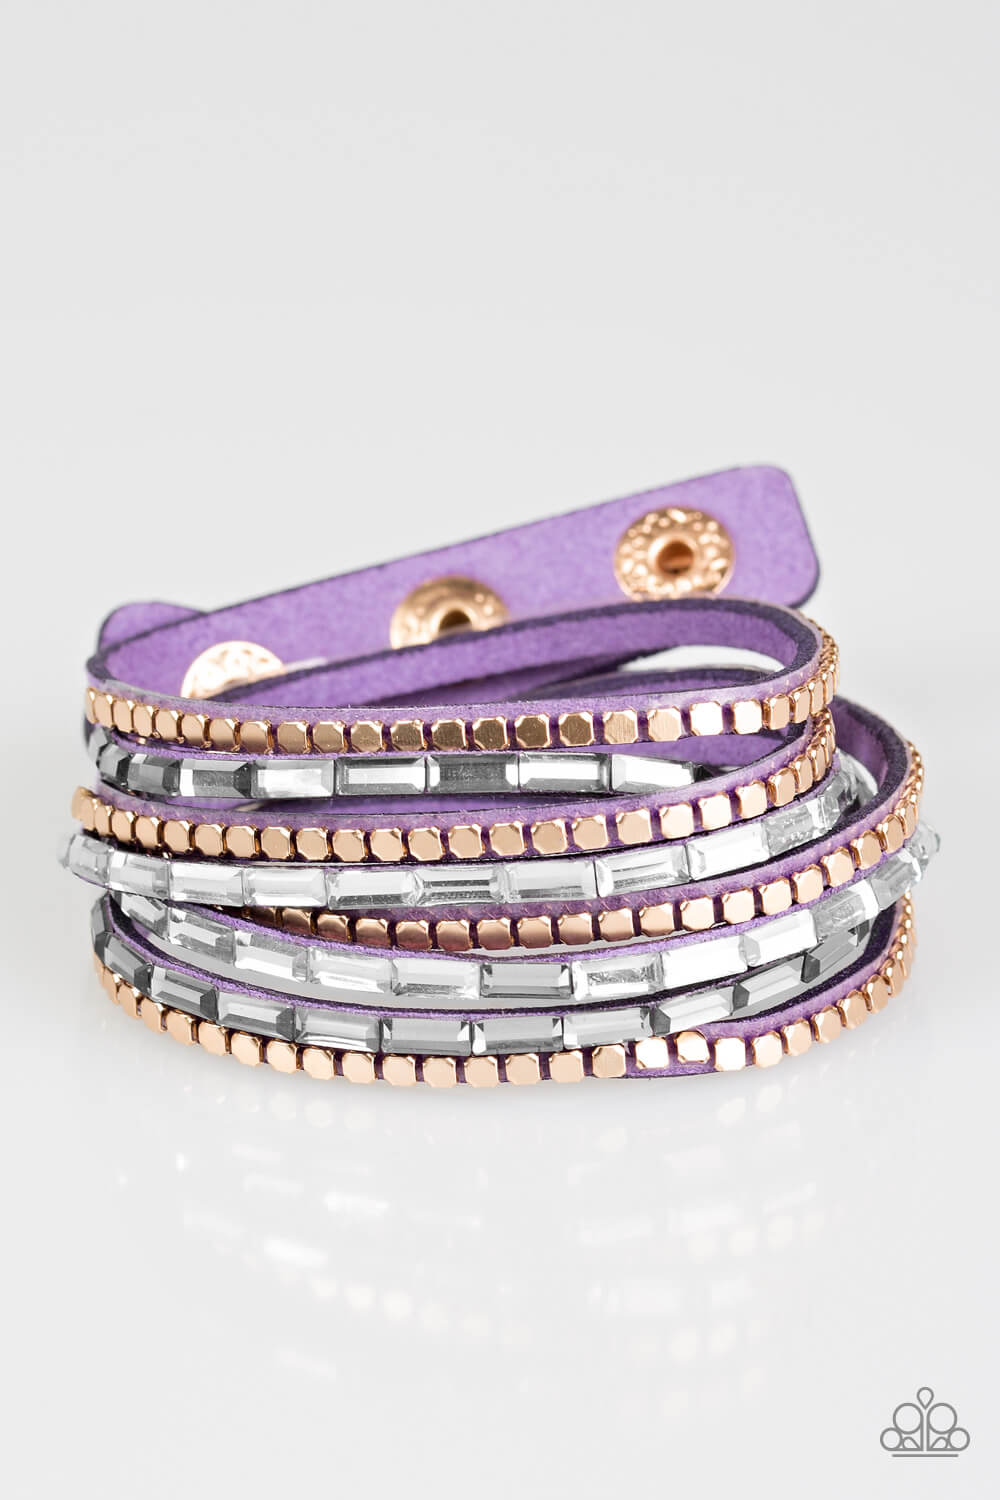 This Time With Attitude - Purple Double Wrap Bracelet - Princess Glam Shop